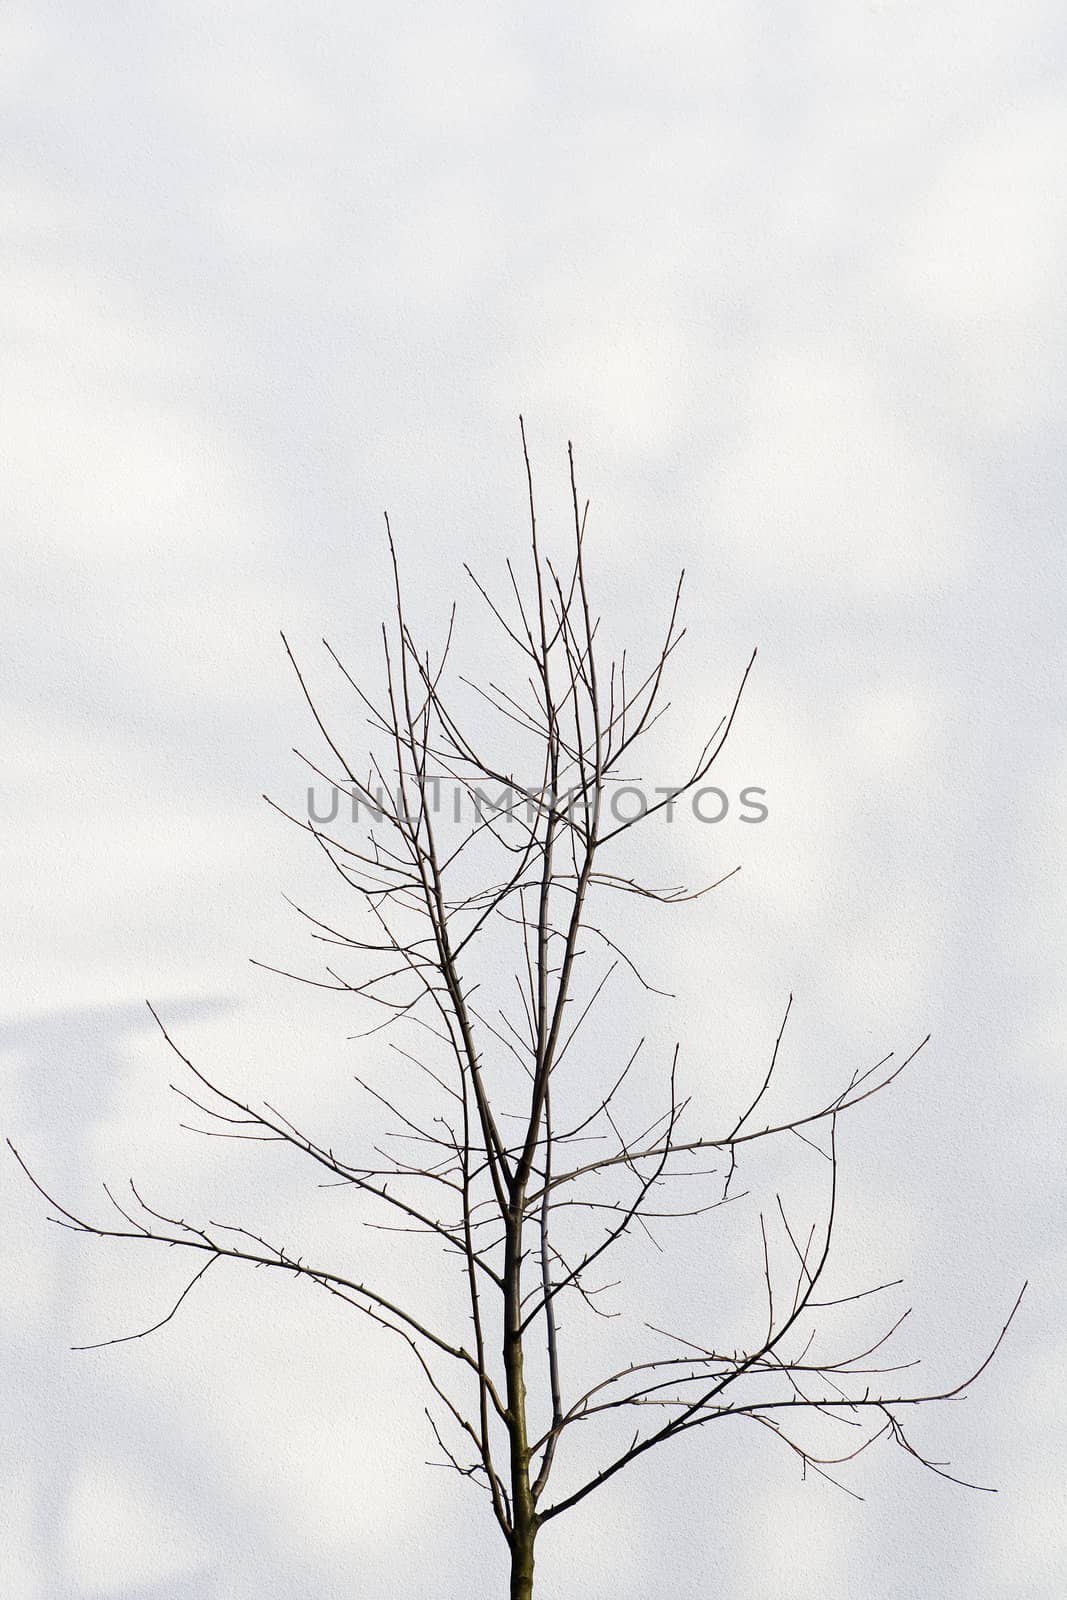 Tree against cloudy sky by gemenacom